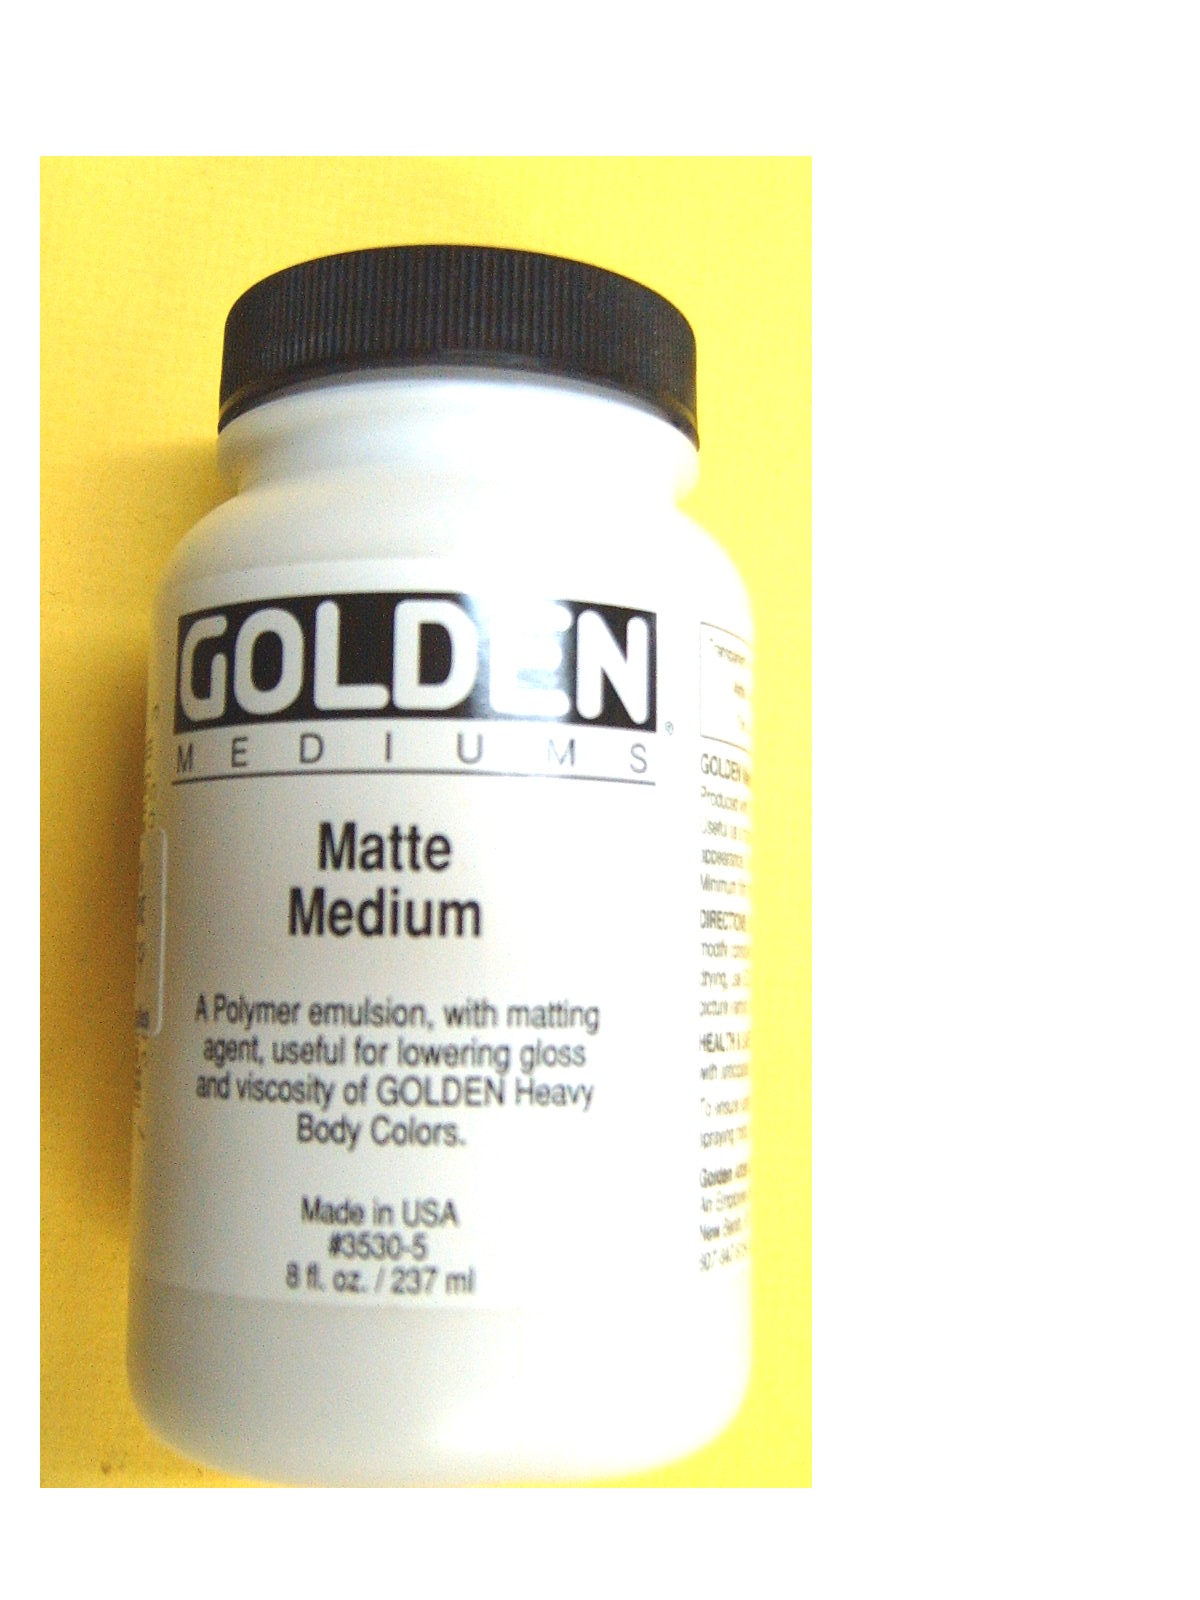 Golden: GAC 900 Fabric Painting Medium 237ml - Everything Airbrush